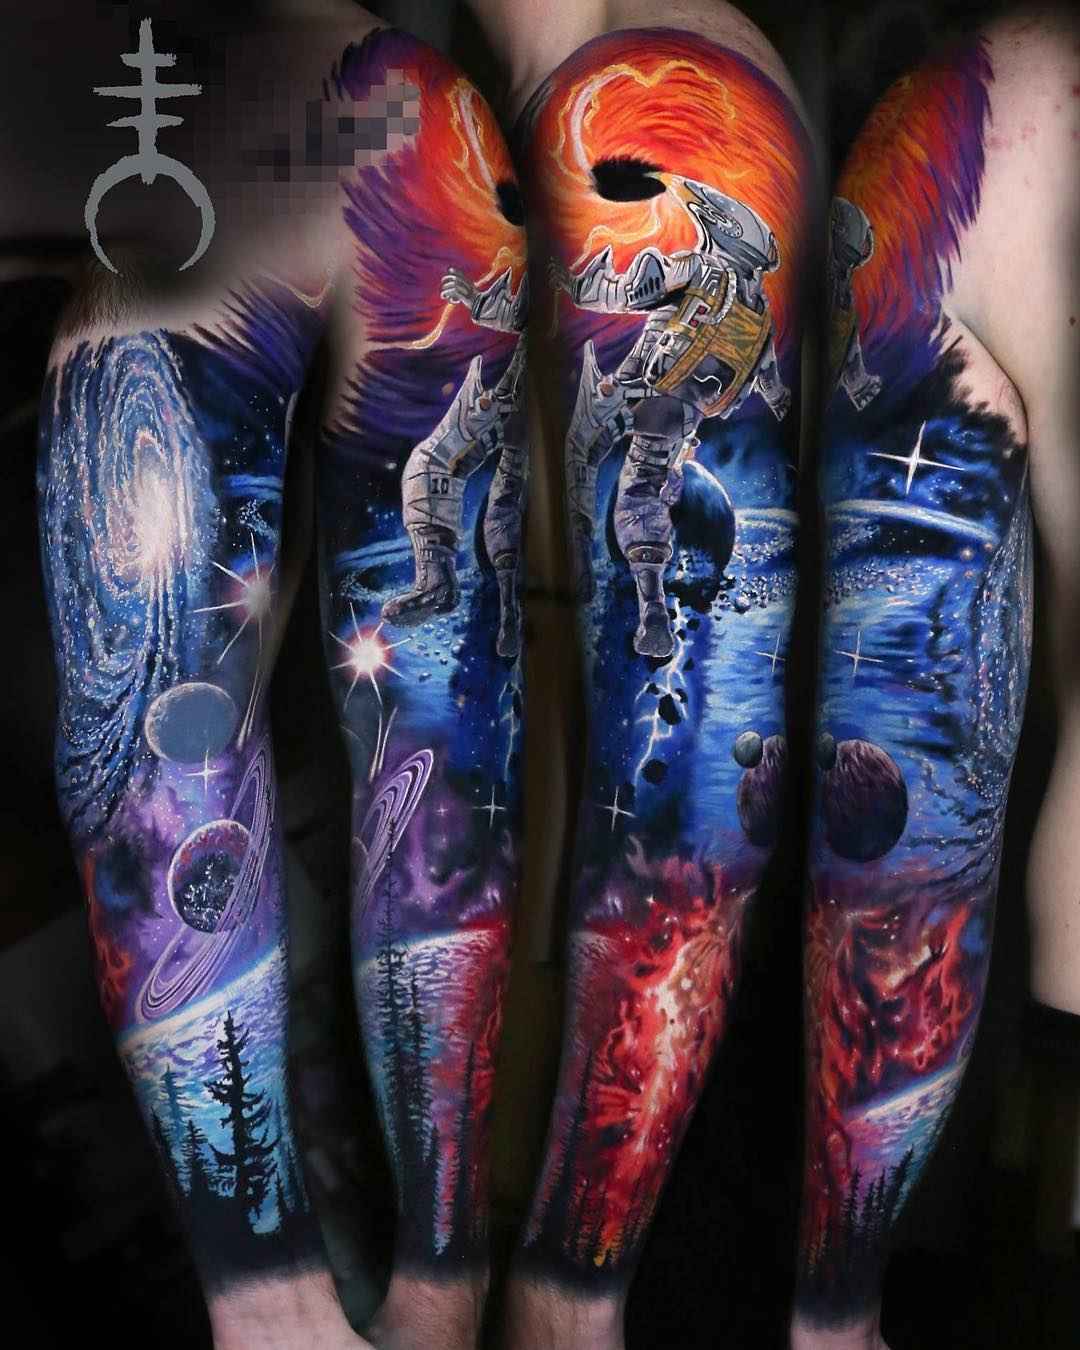 Color tattoo realism by El Mori | iNKPPL